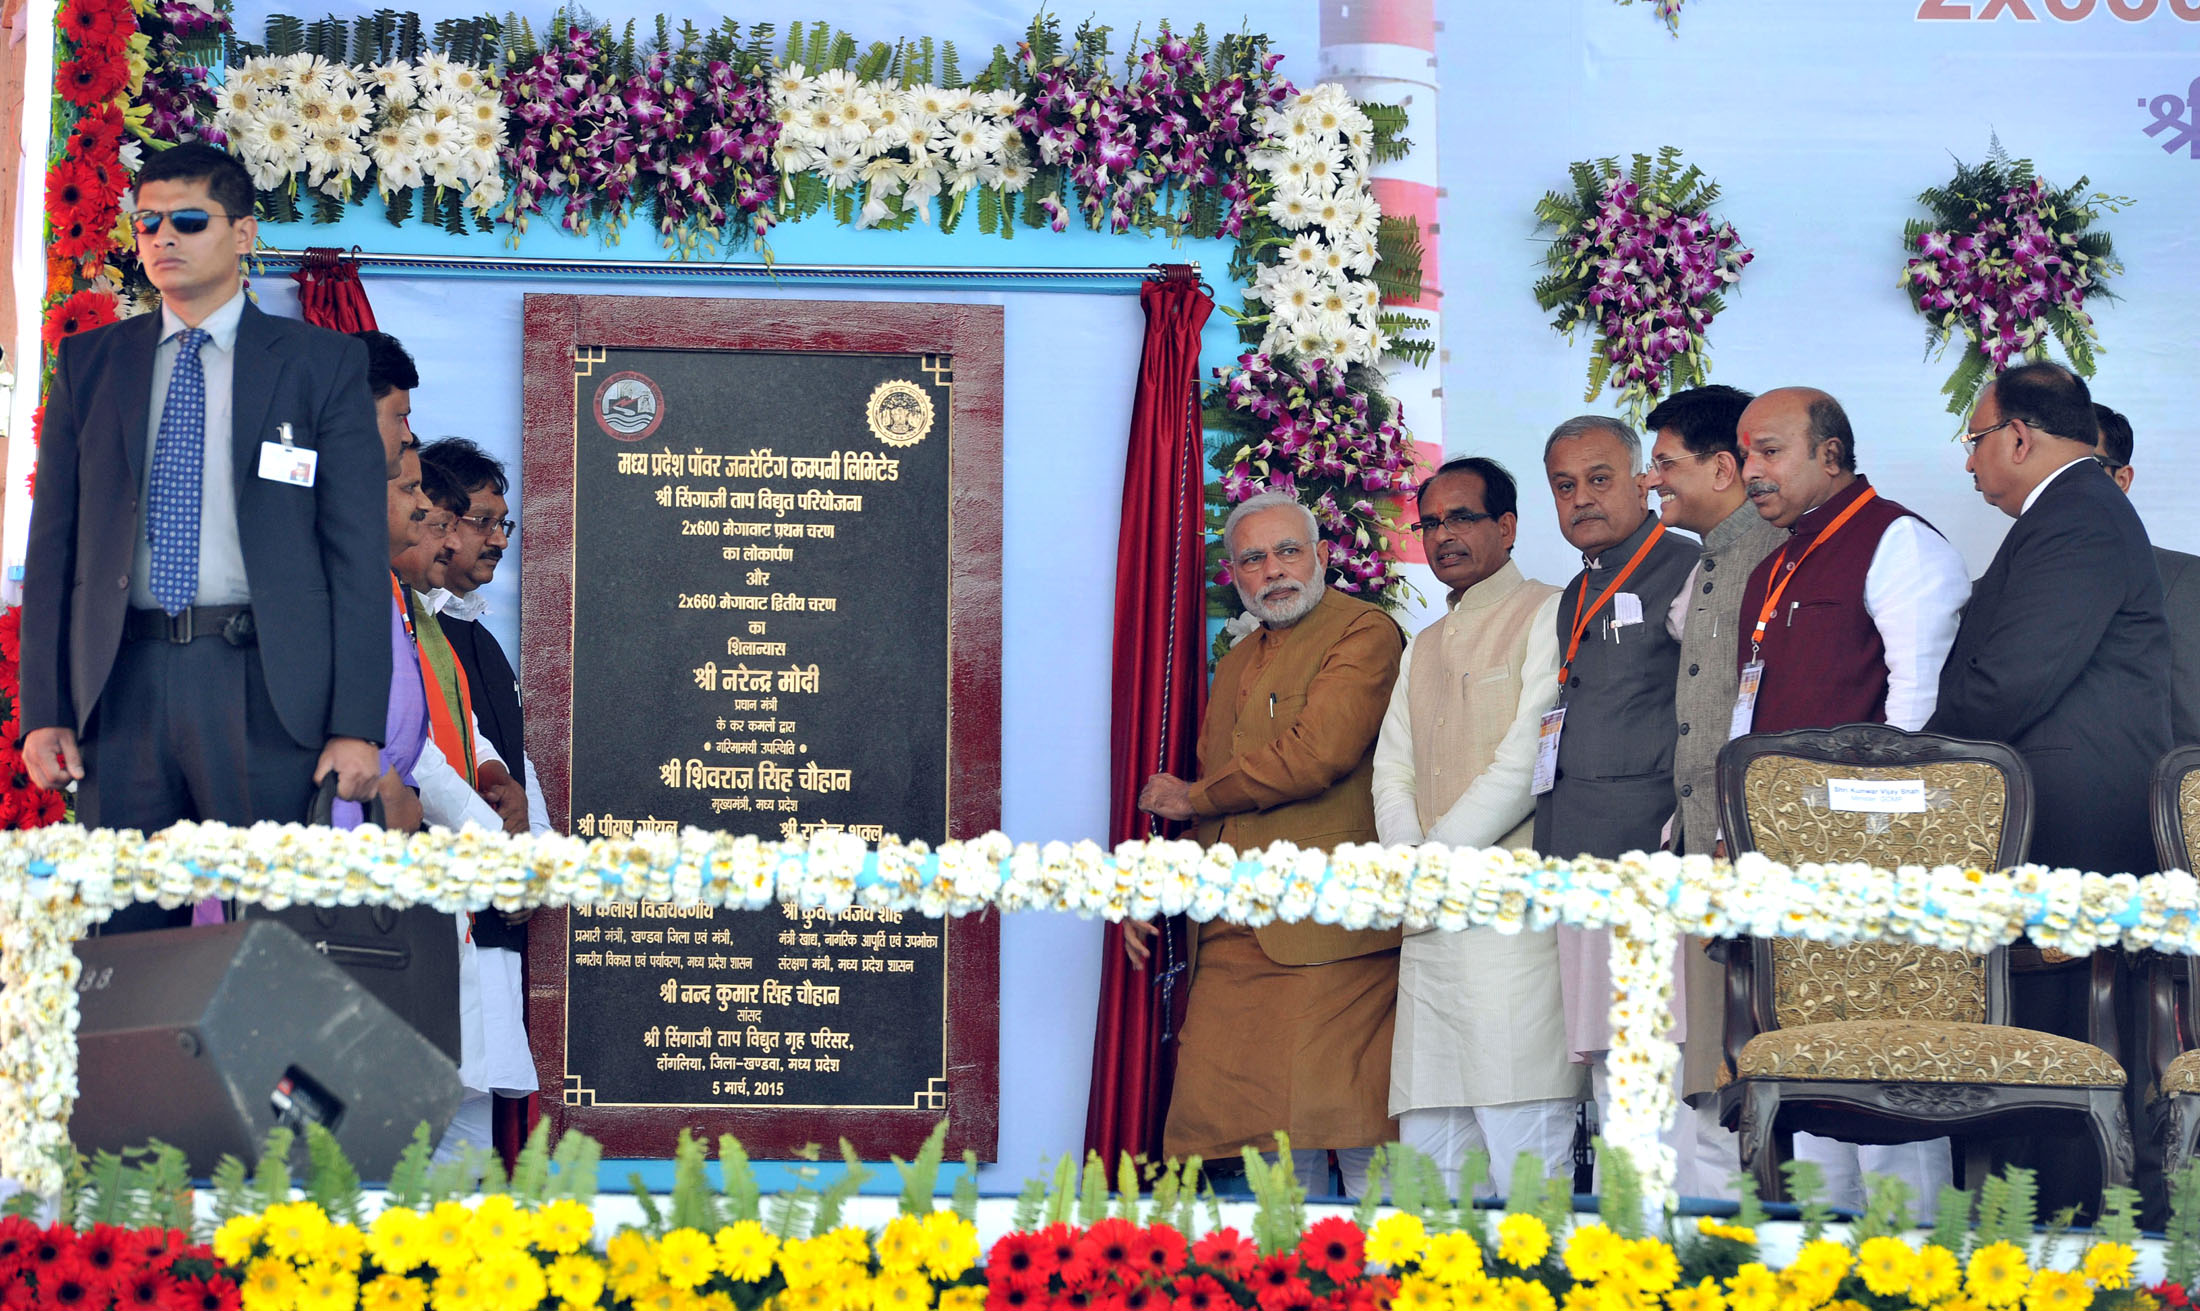 P M dedicates Shri Shingaji Thermal Power Project to the nation